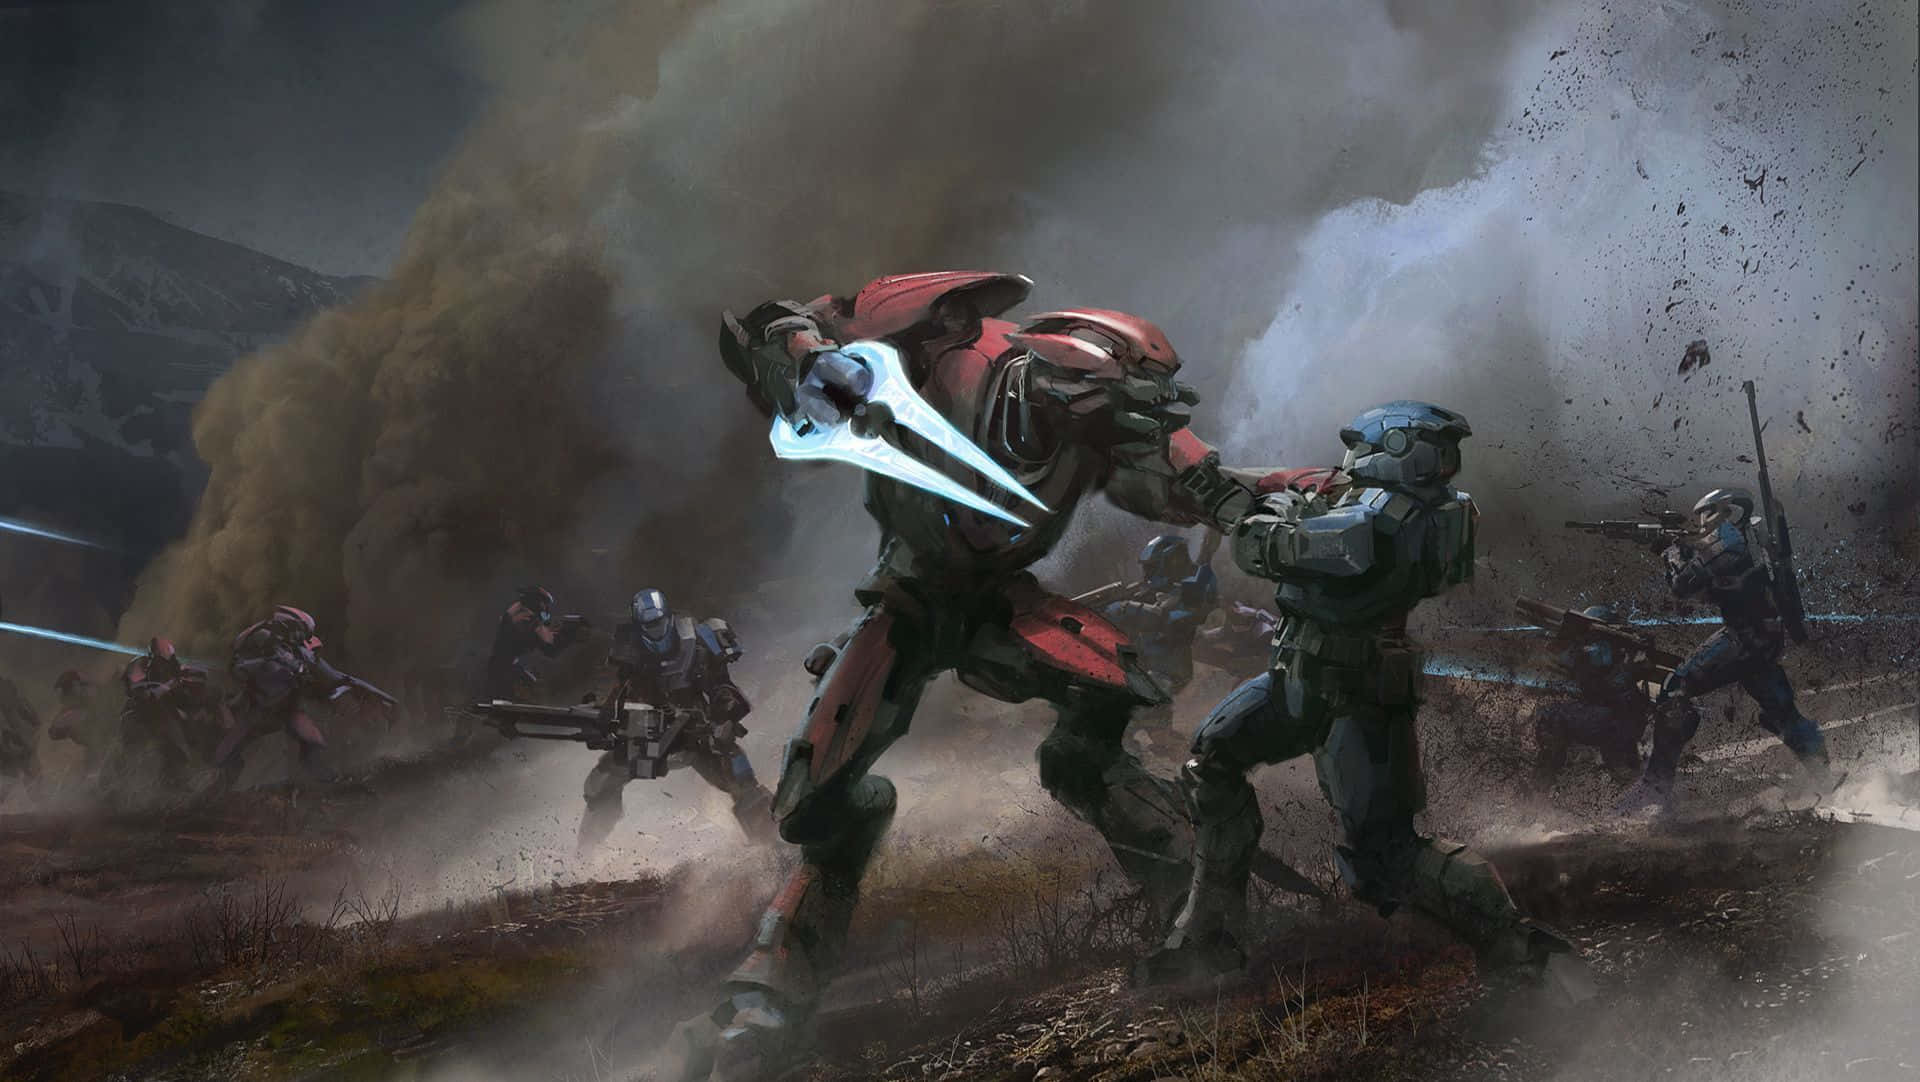 Escenaépica De Batalla En Halo Covenant Fondo de pantalla